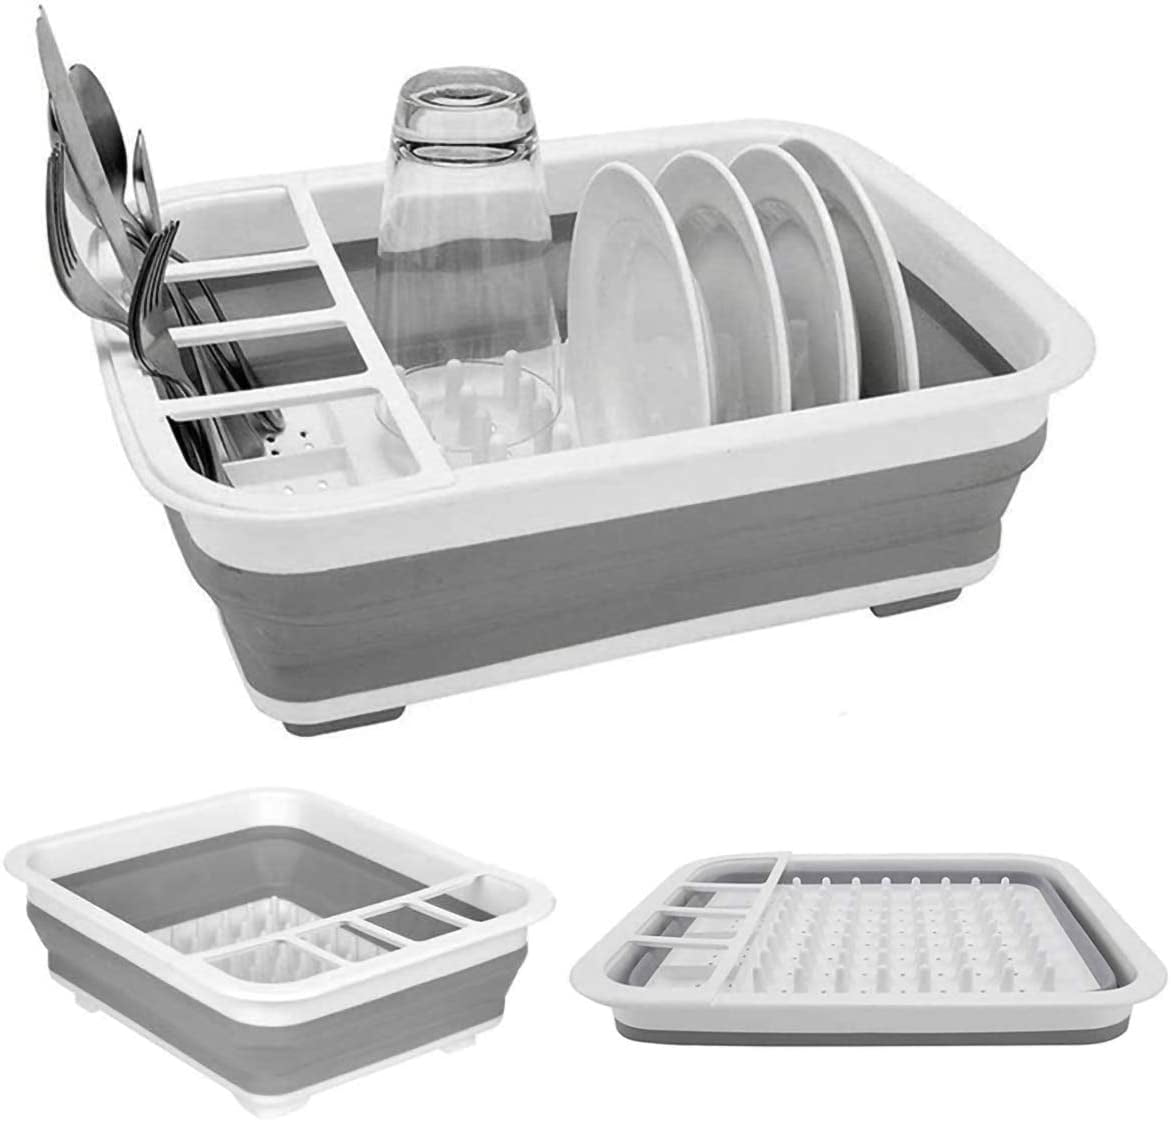 Kitchen Portable Collapsible Sink Dish Drainer Basket Drying Rack Organizer BT 